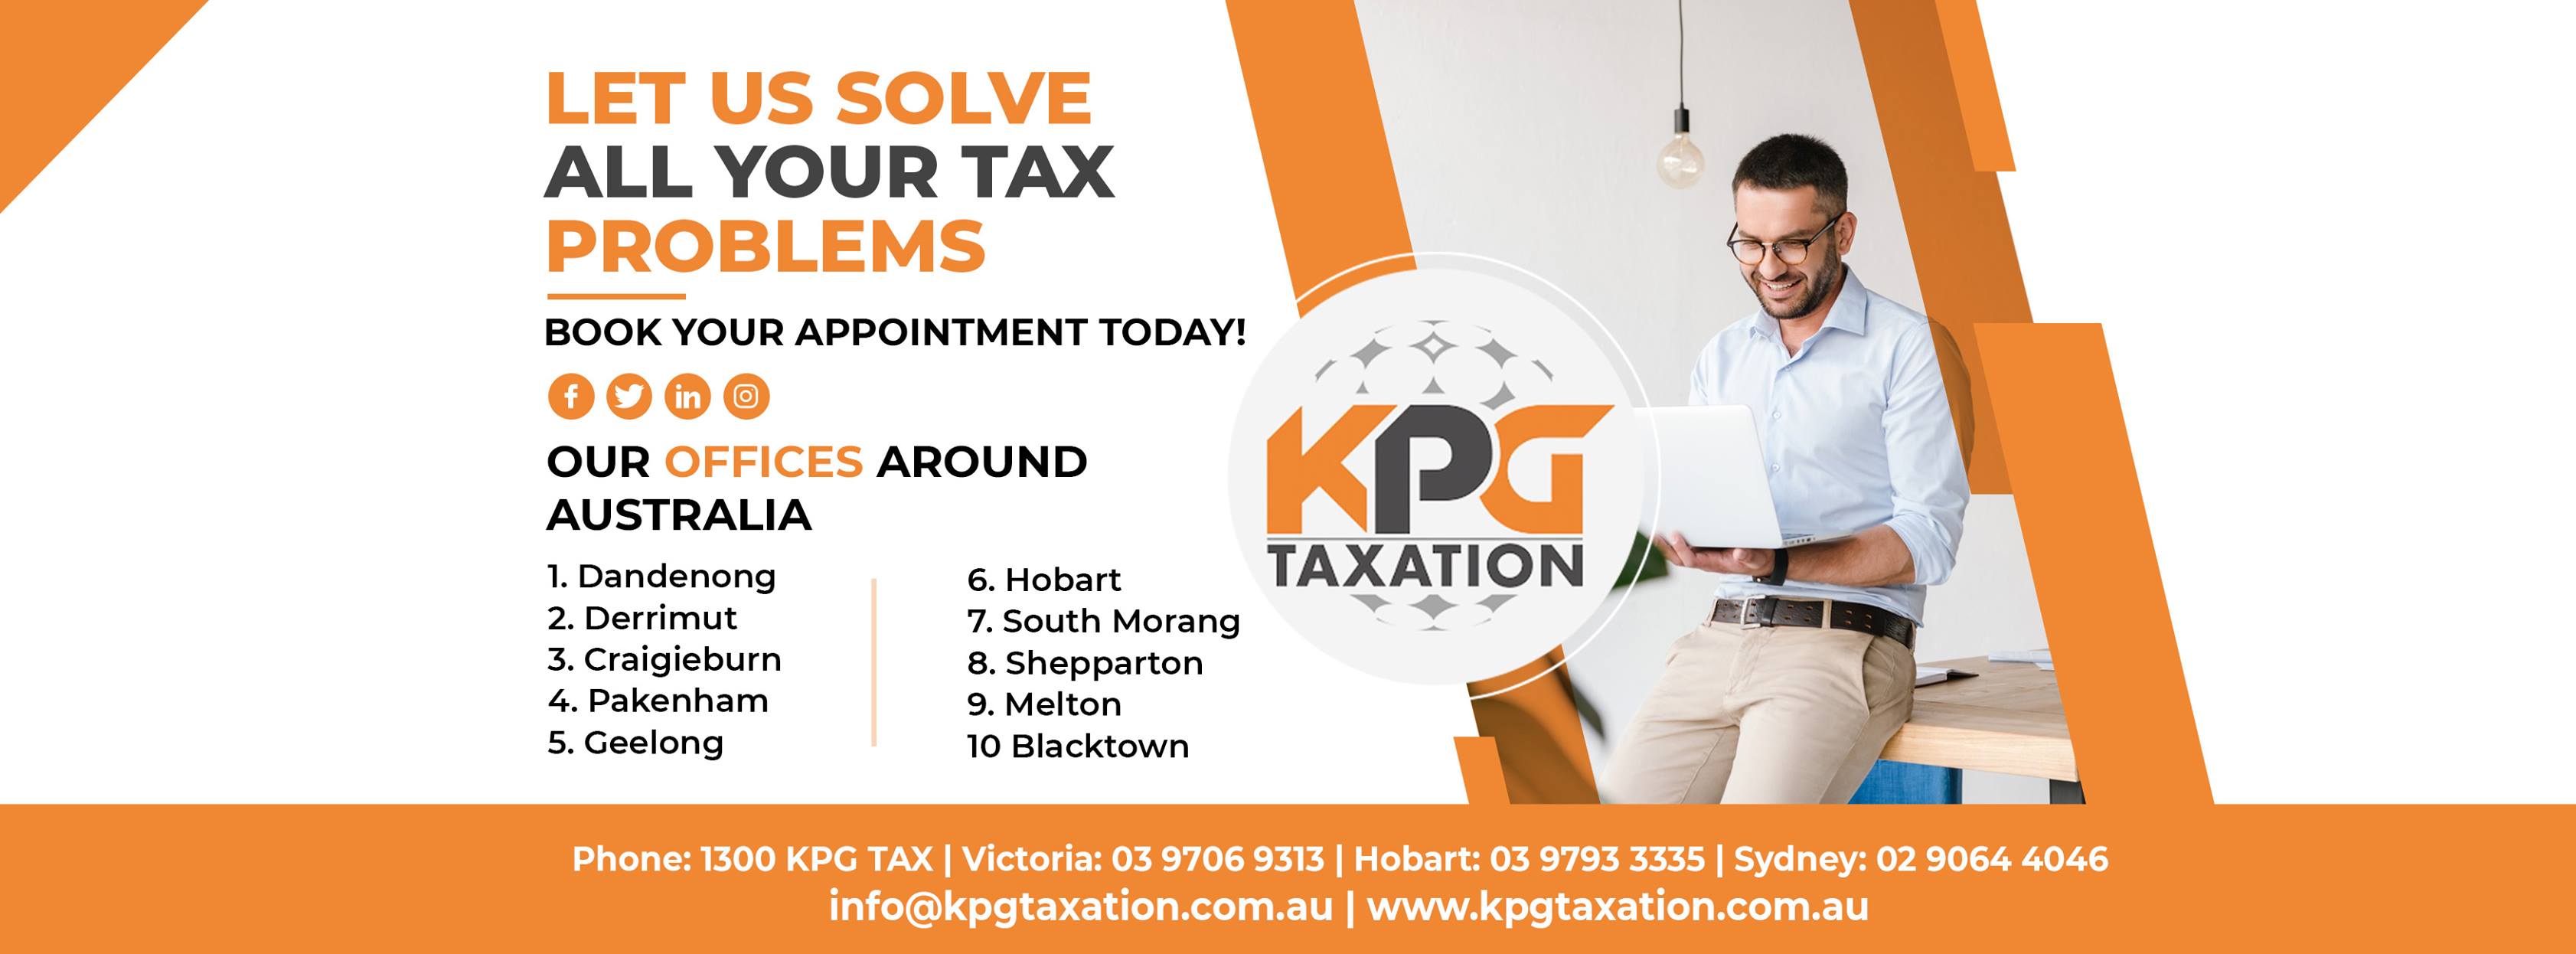 KPG Taxation ,l Tax Accountant Geelong